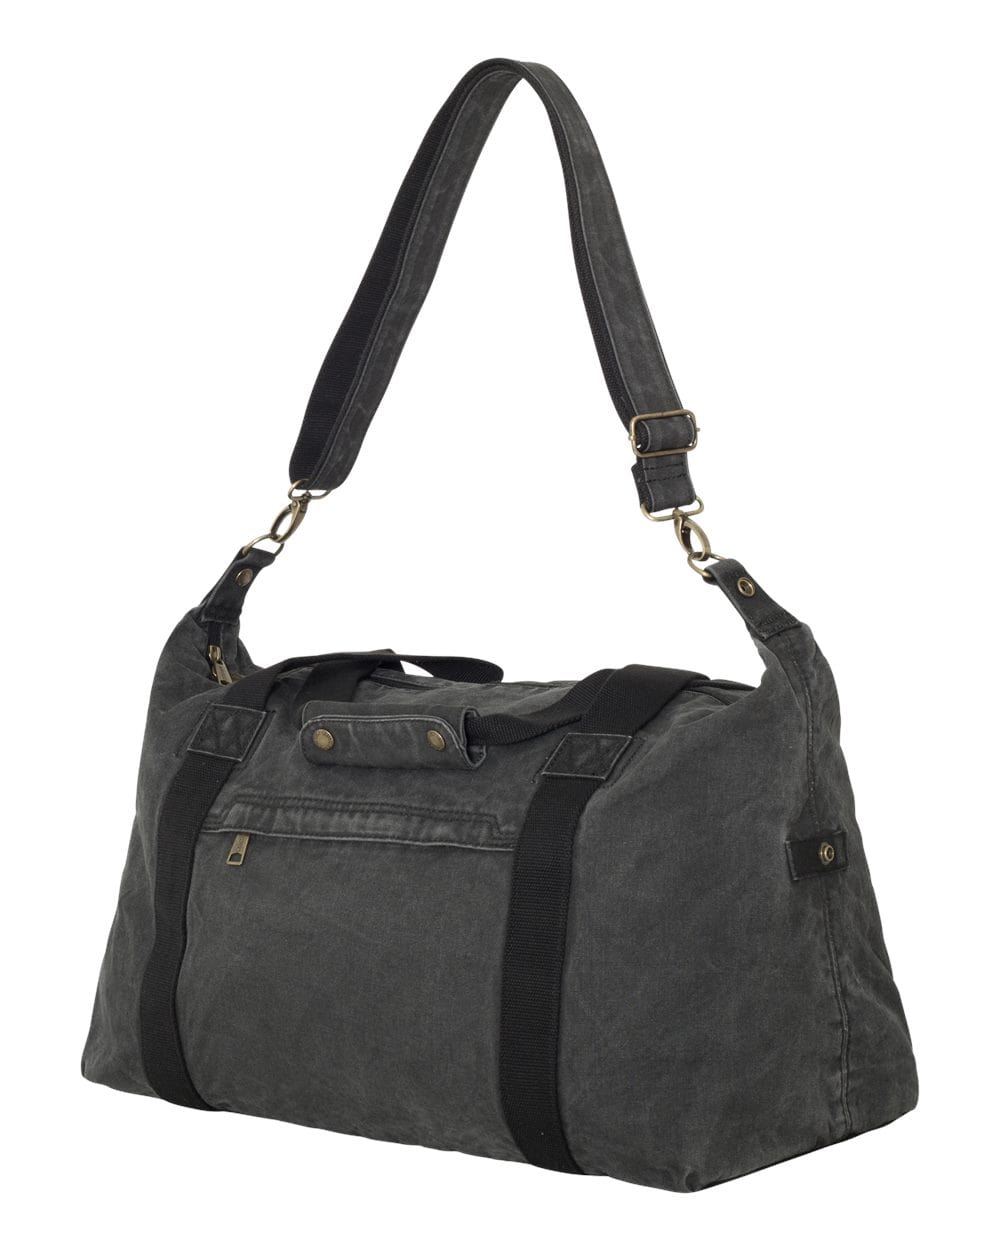 DRI DUCK Bags One Size / Charcoal/Black DRI DUCK - Weekender Bag